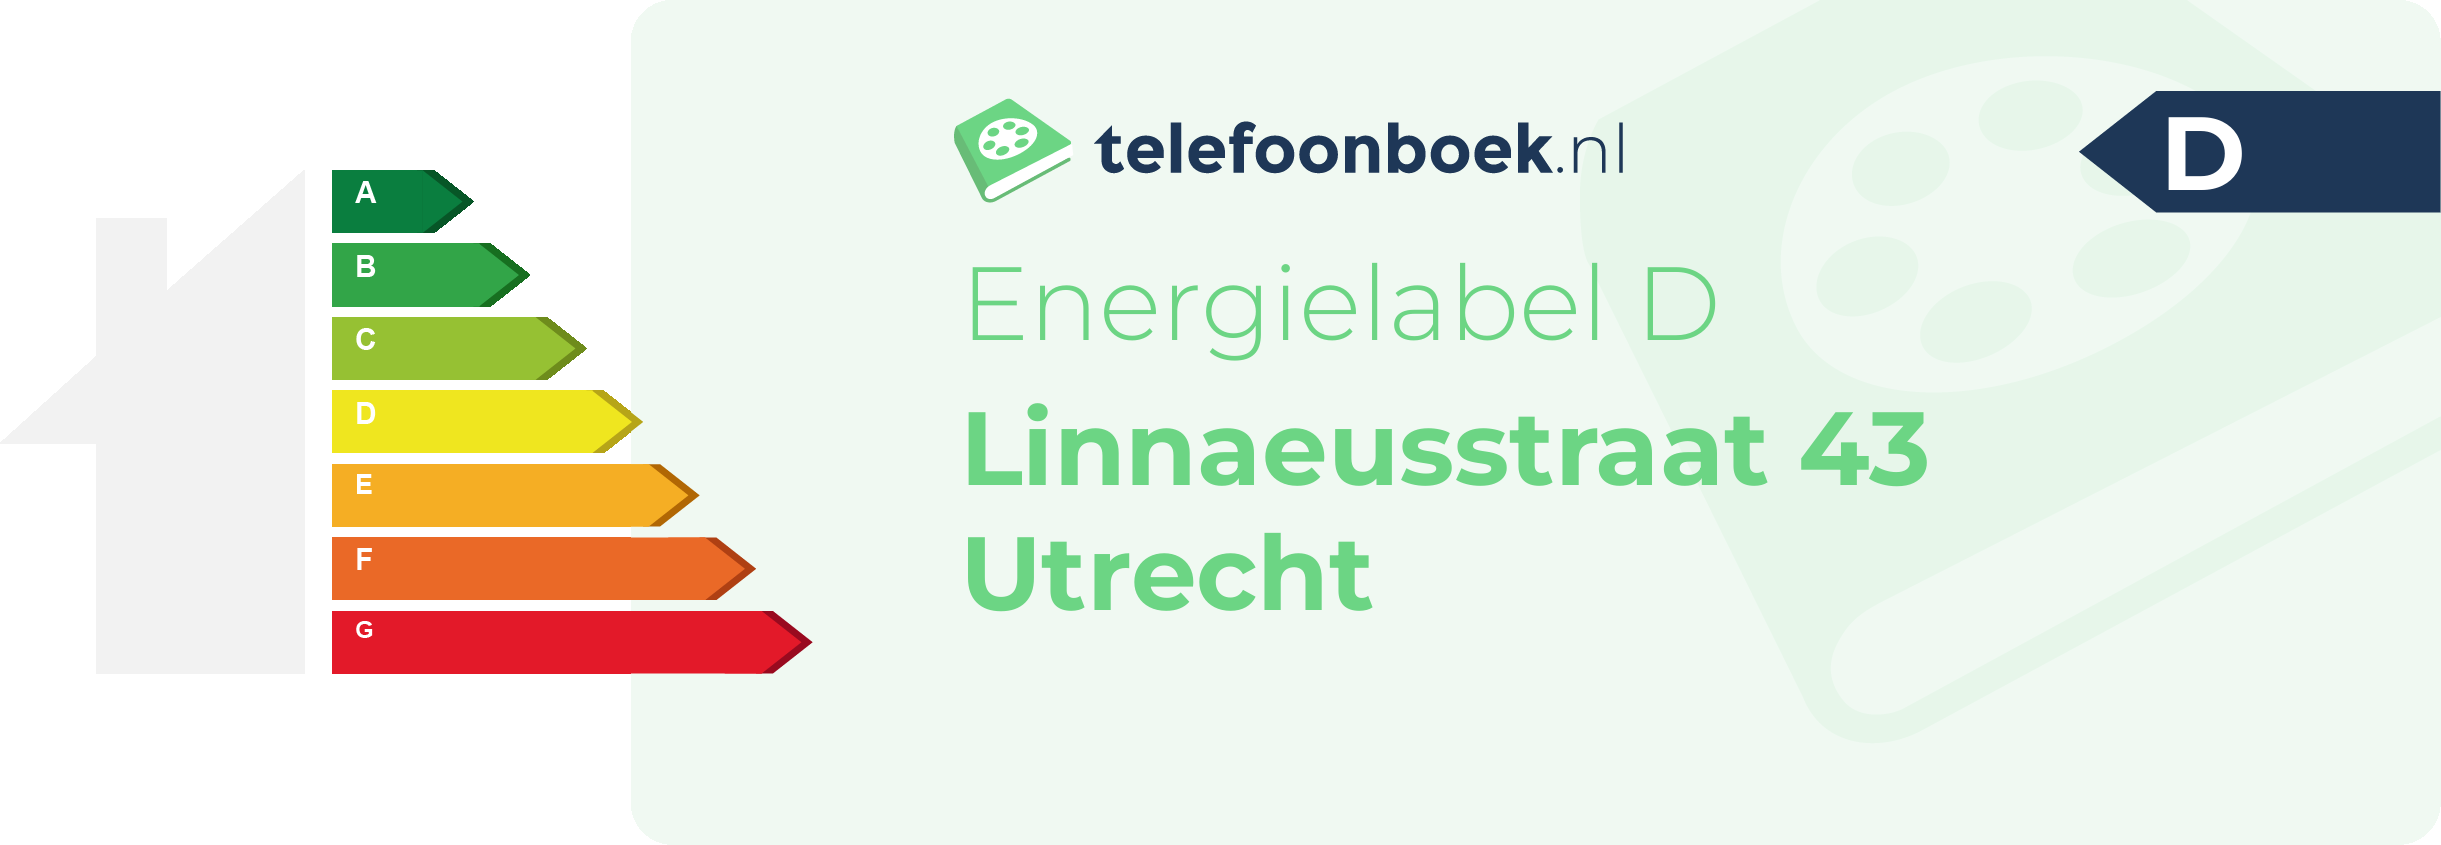 Energielabel Linnaeusstraat 43 Utrecht